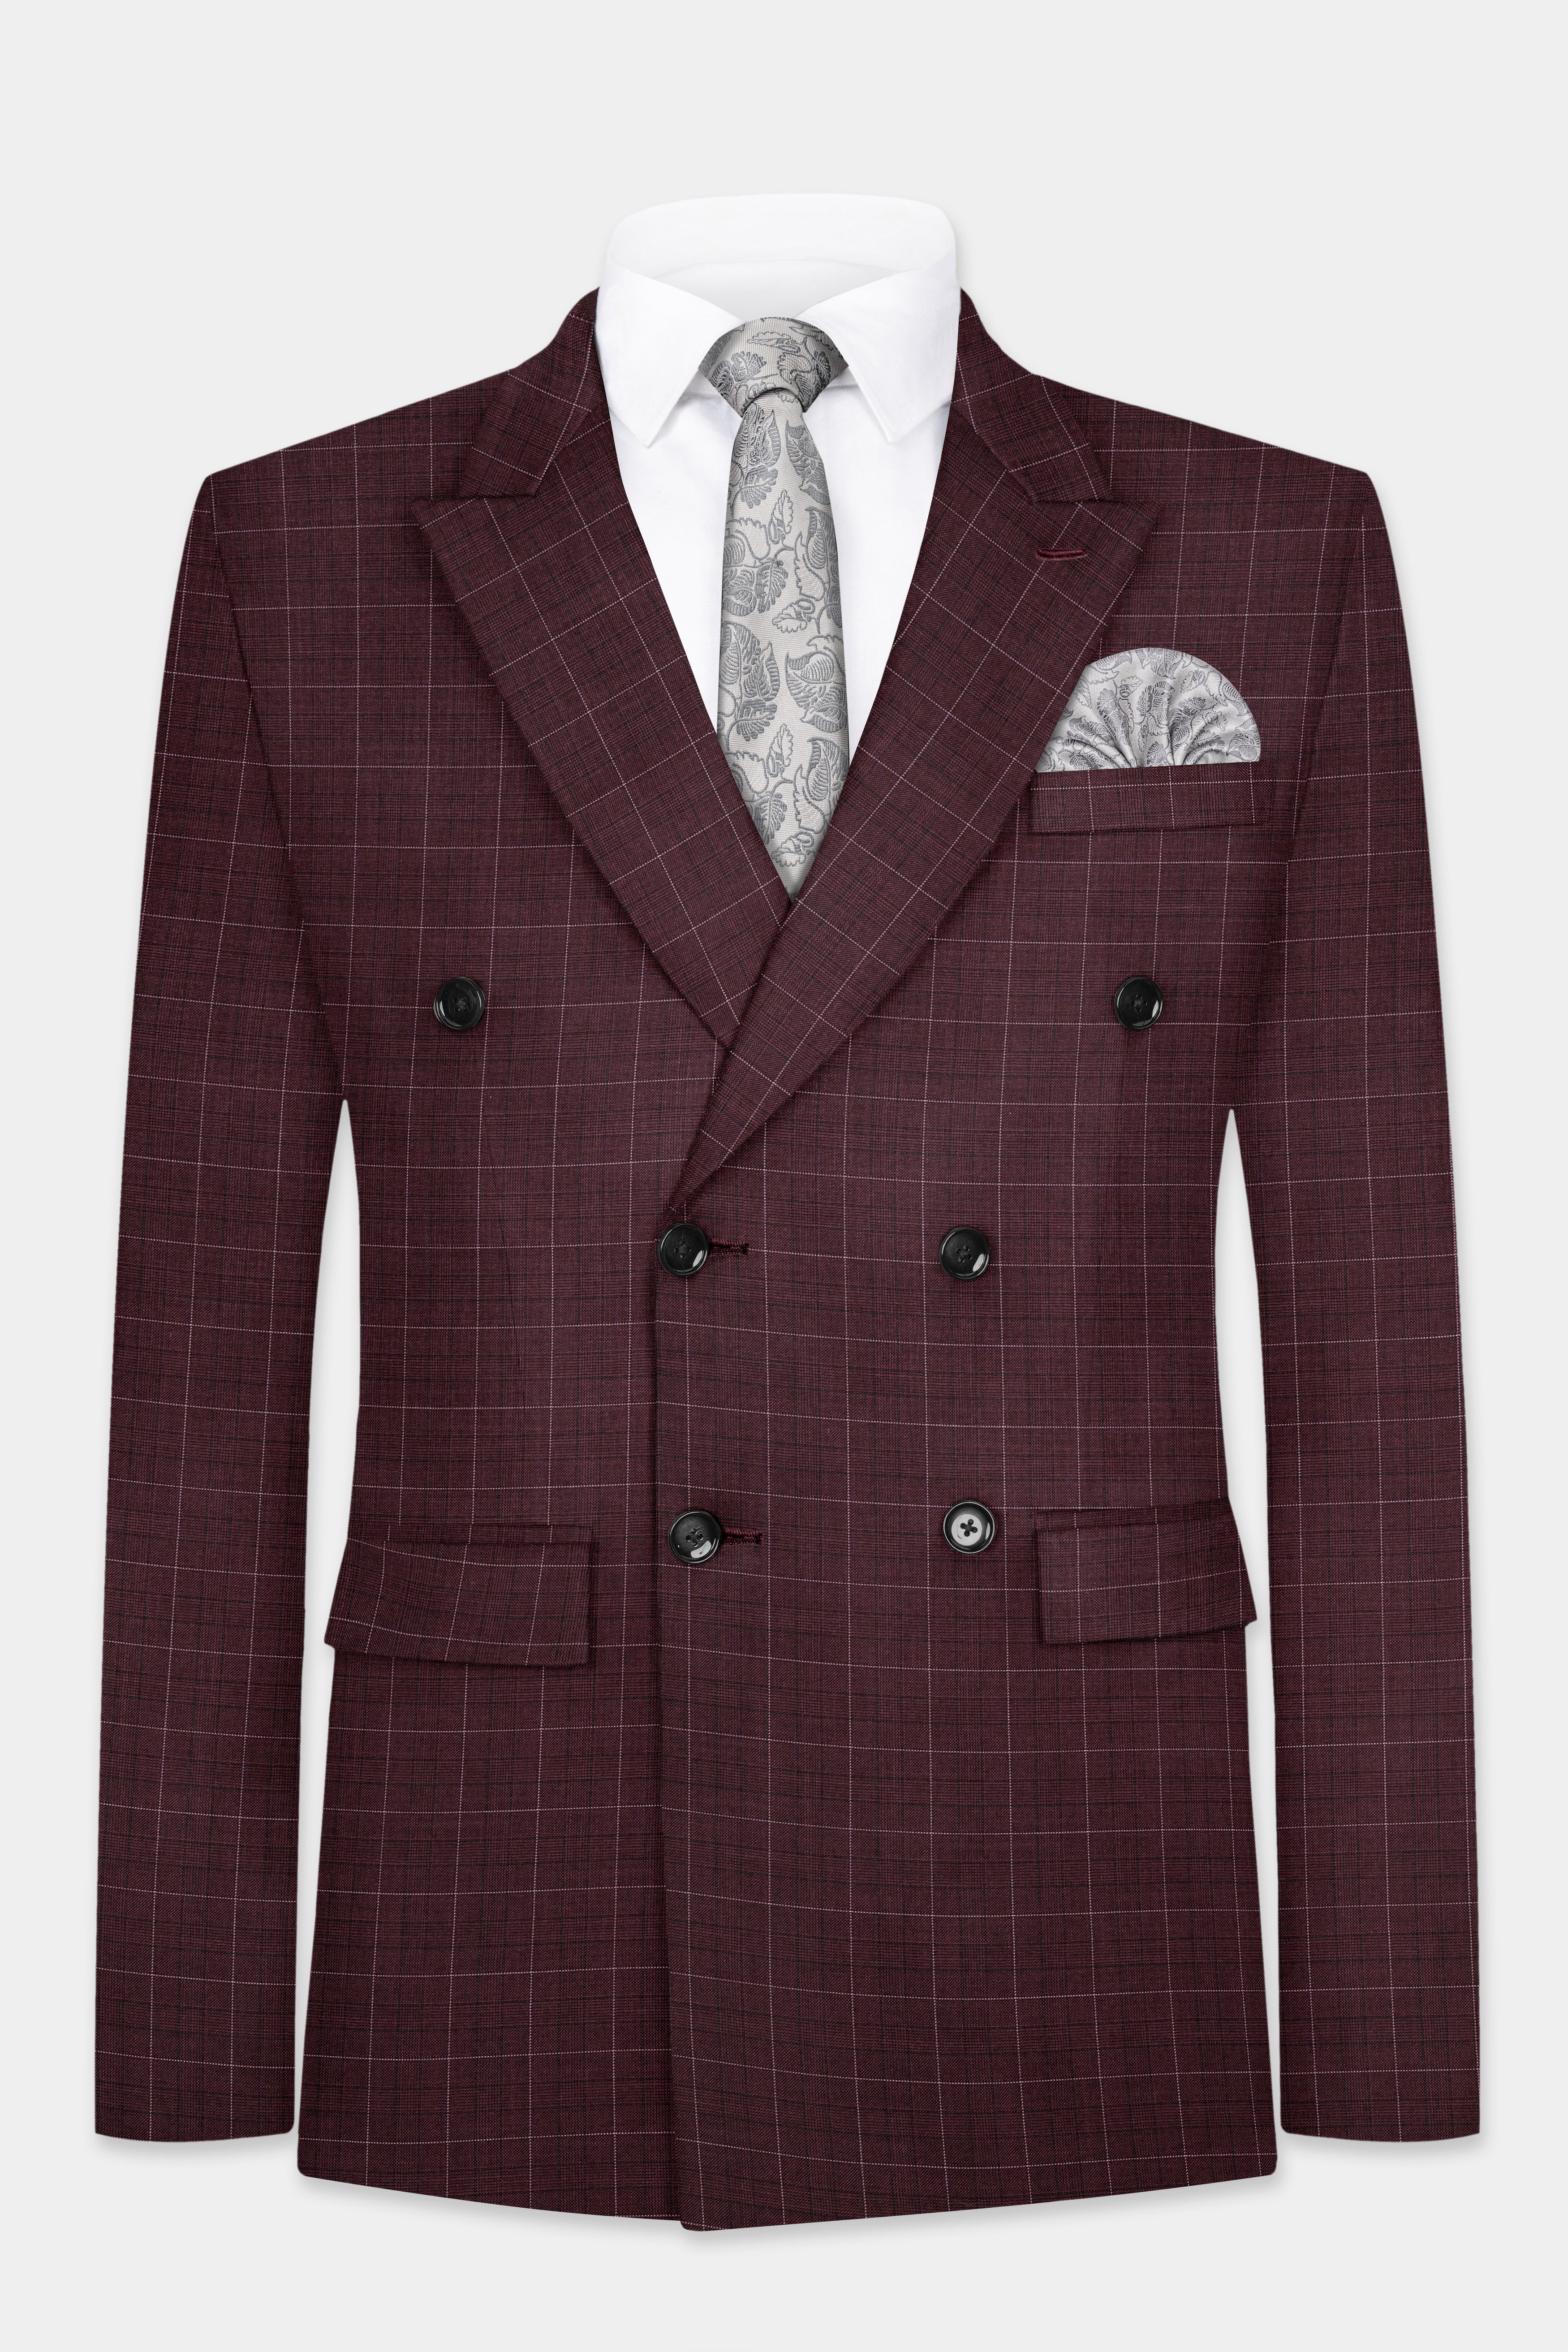 Iroko maroon Windowpane Wool Rich Double Breasted Suit